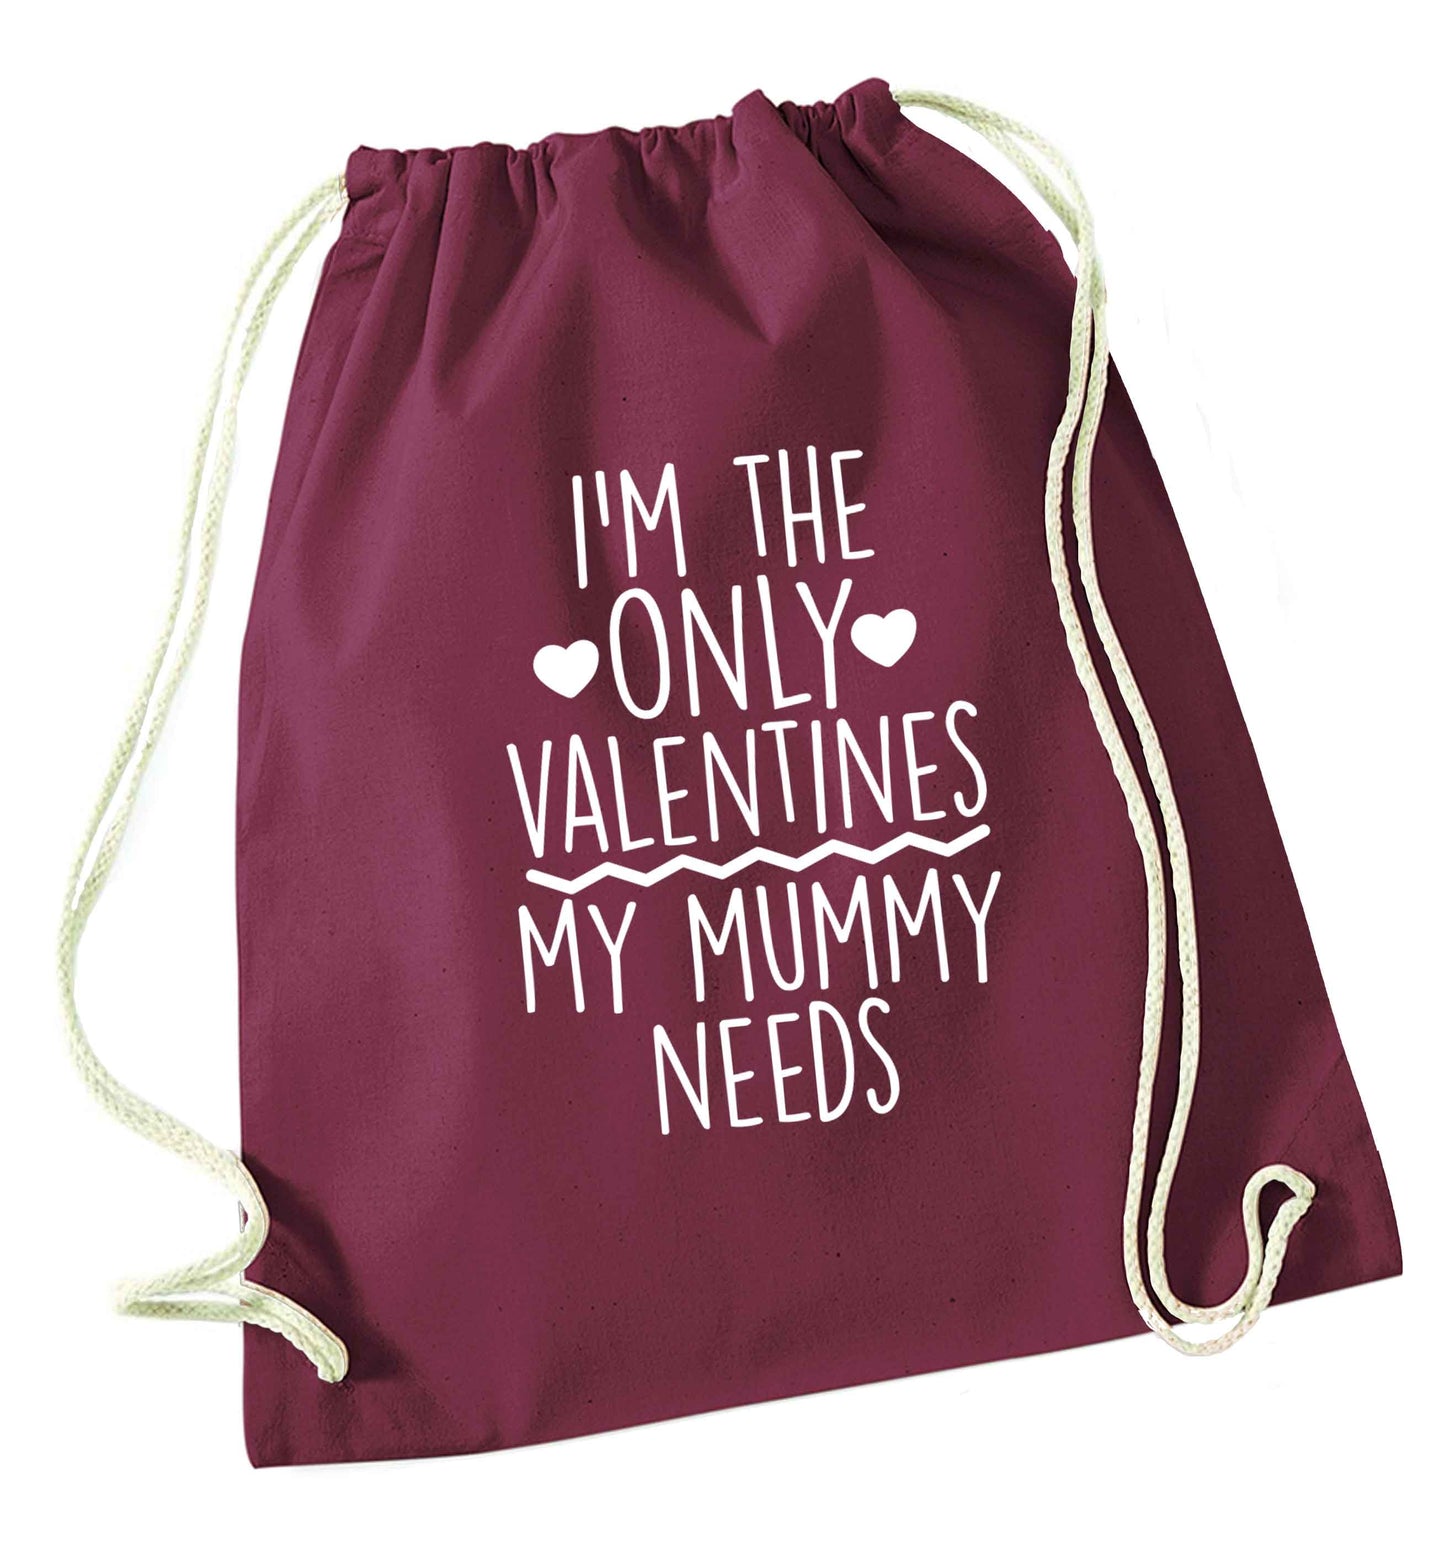 I'm the only valentines my mummy needs maroon drawstring bag